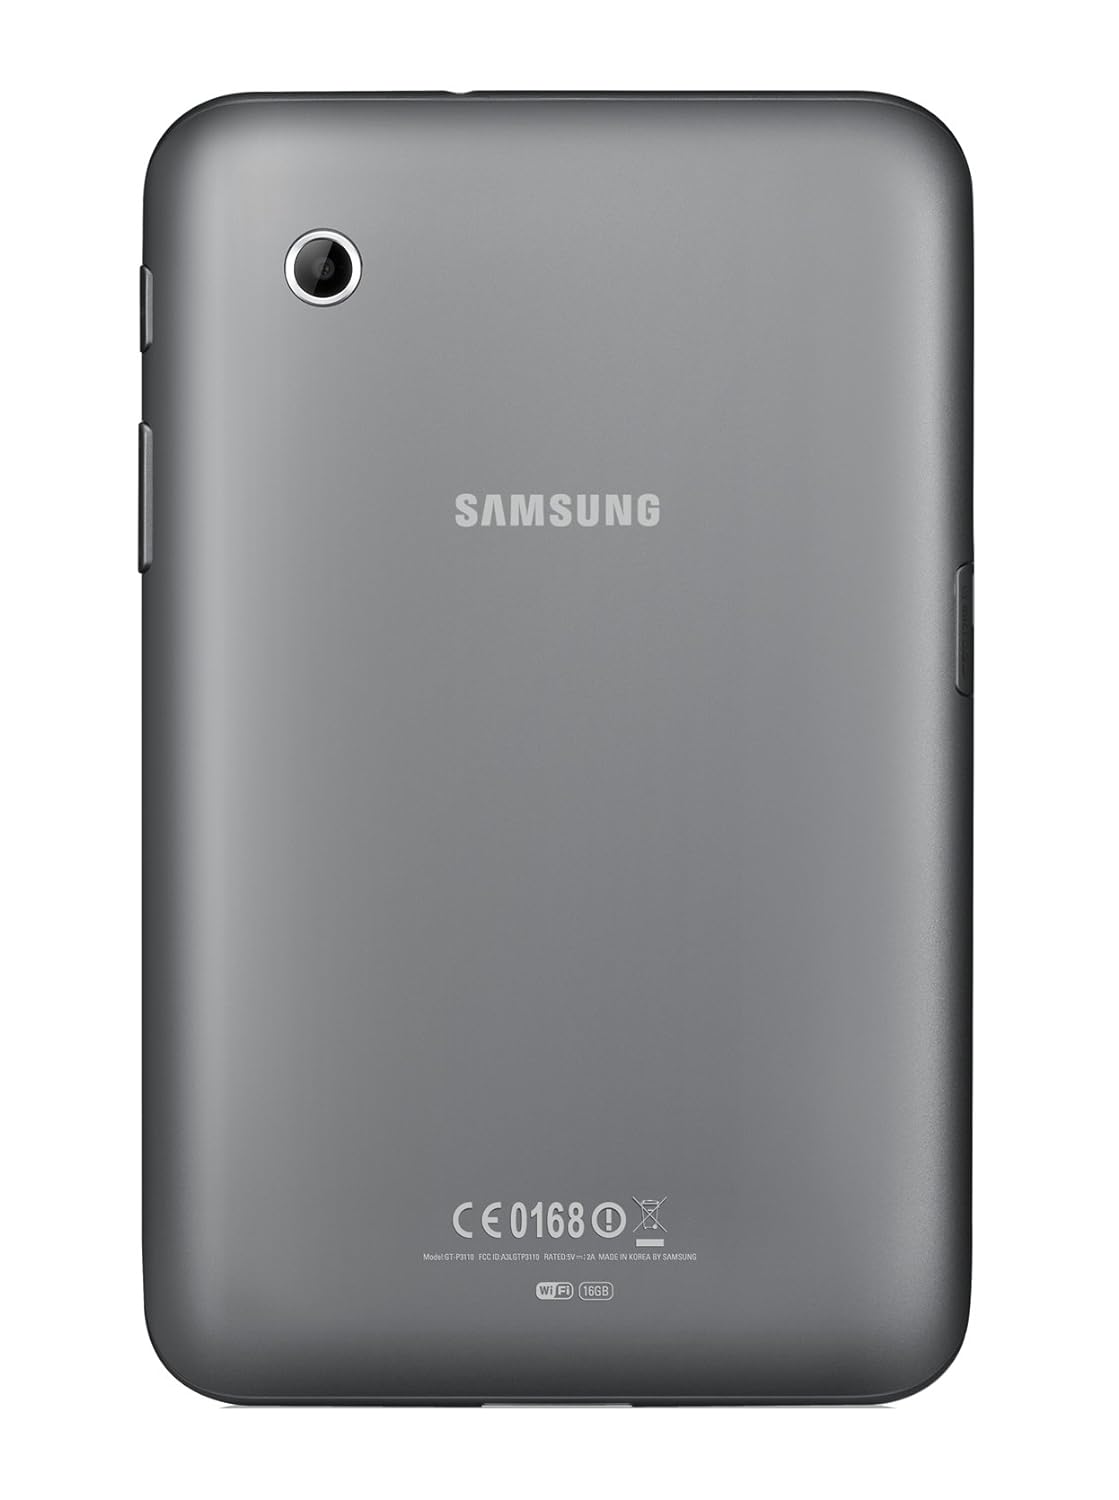 Samsung Galaxy Tab 2 P3110 WIFI Tablet